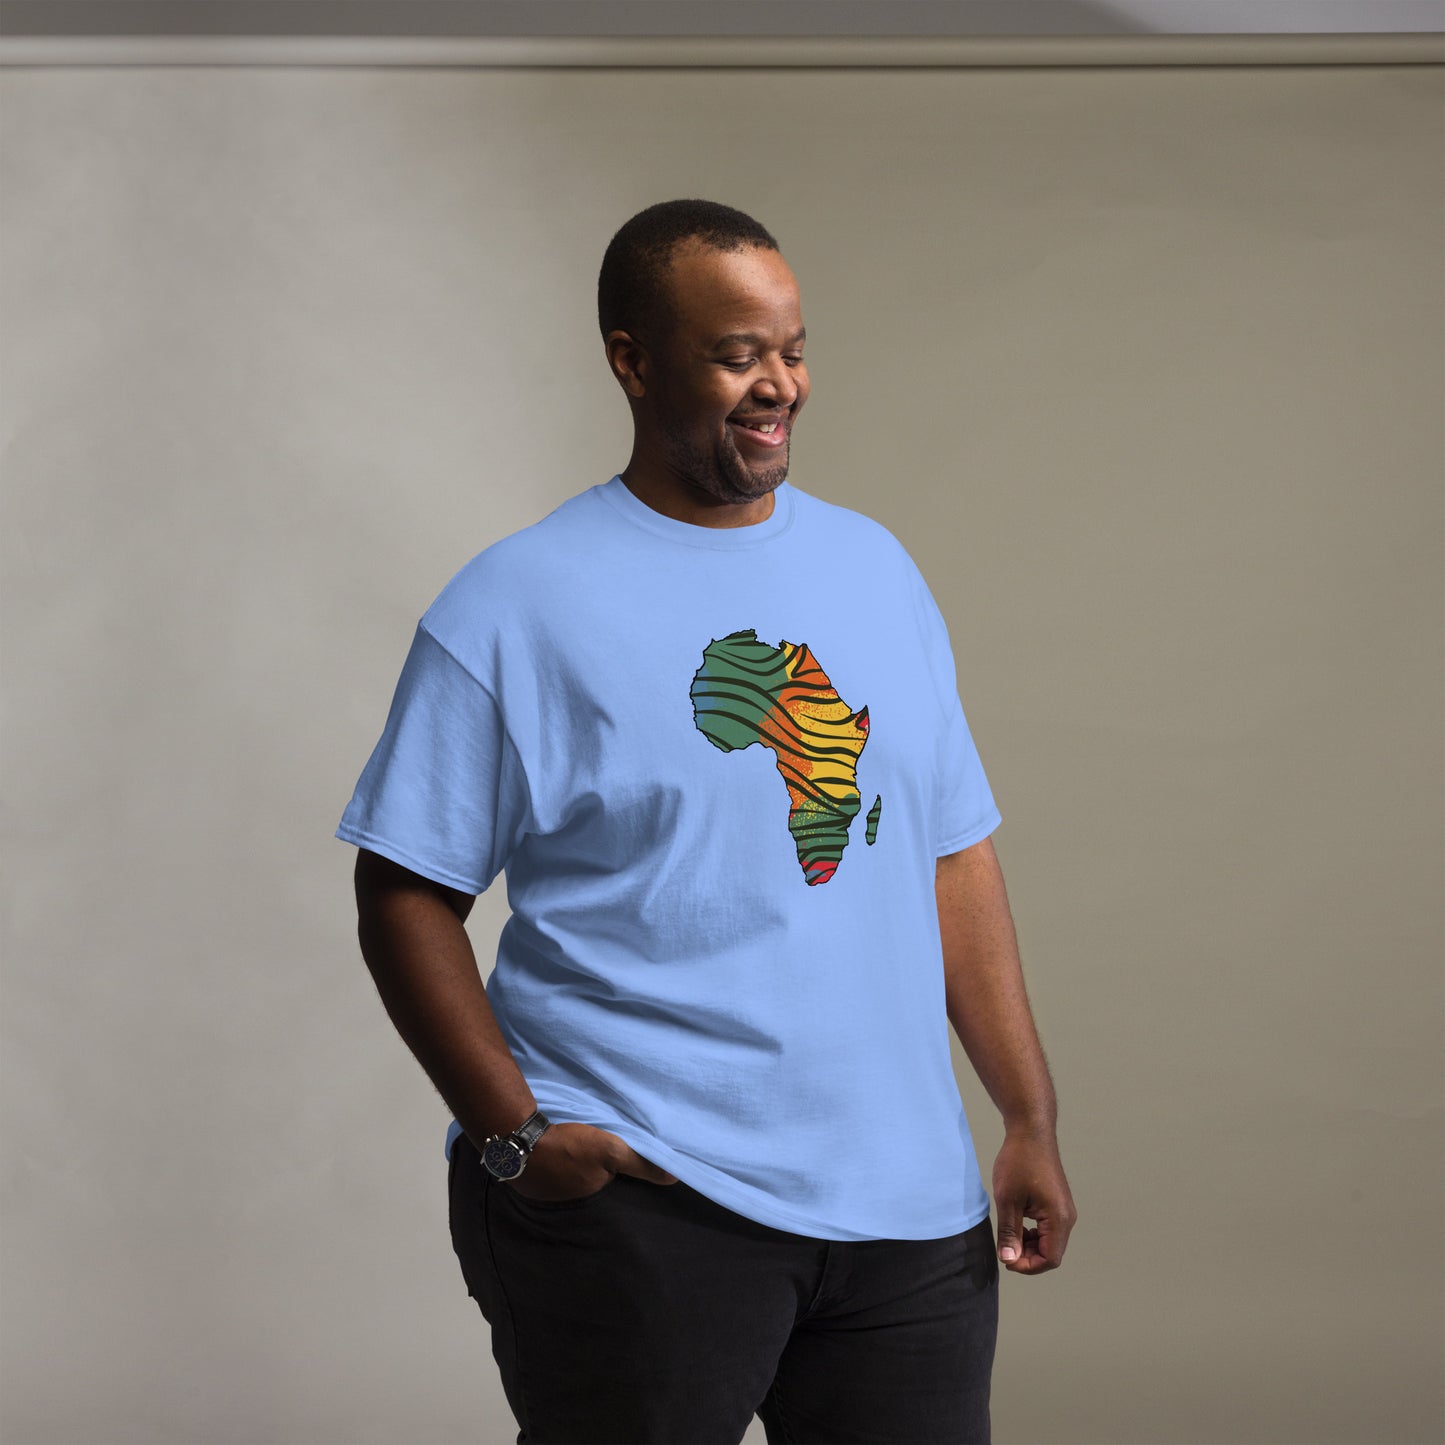 Africa Classic T-Shirt